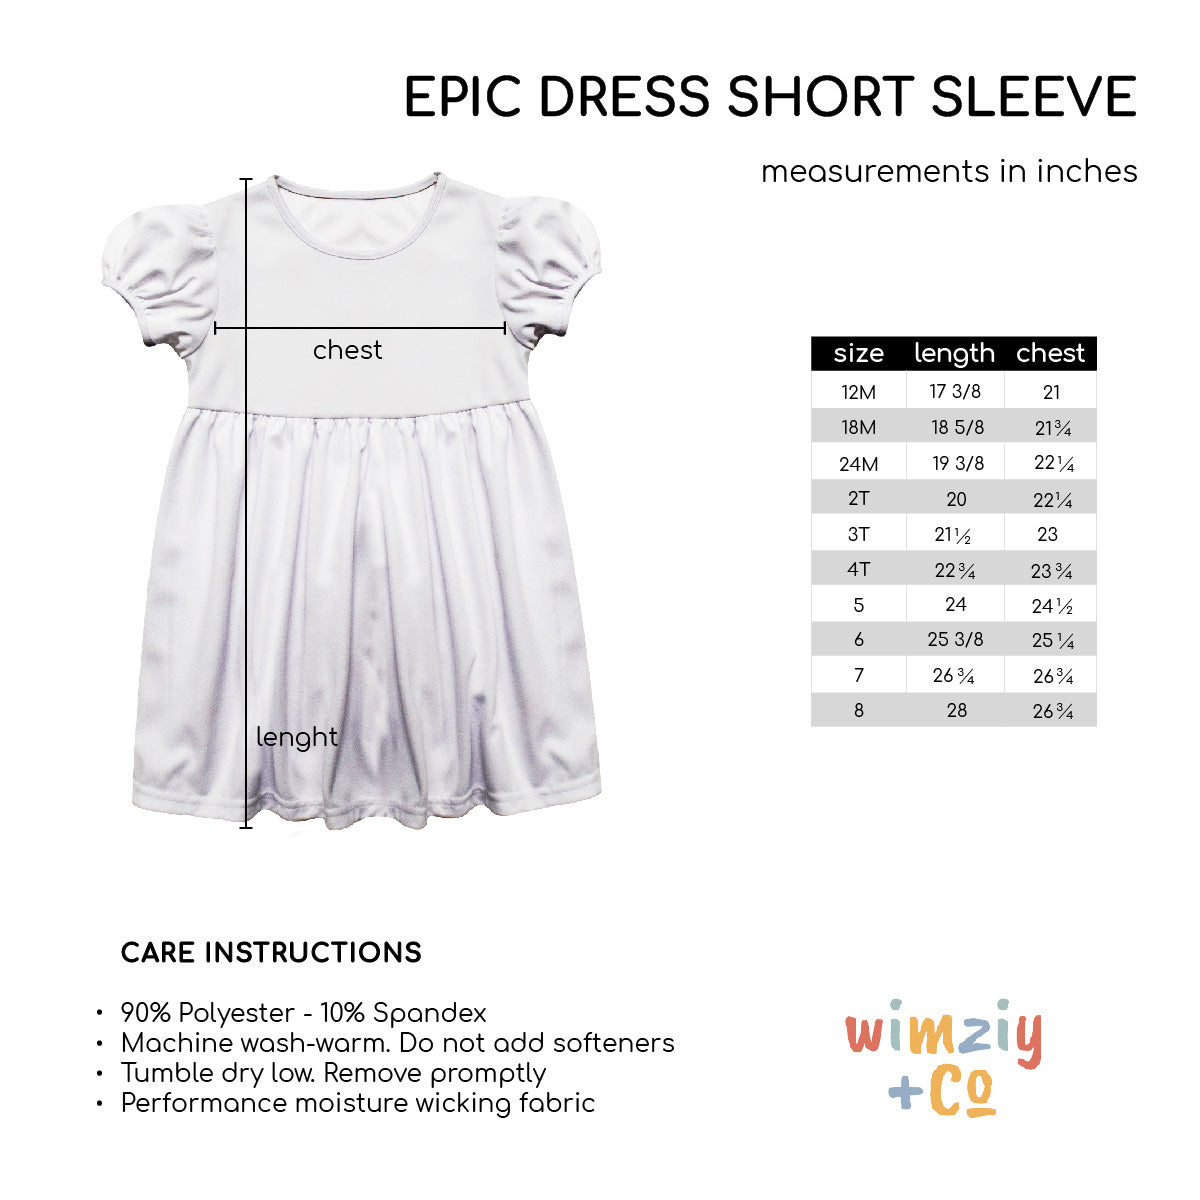 Cherries Print Personalized Monogram Navy Short Sleeve Epic Dress - Wimziy&Co.